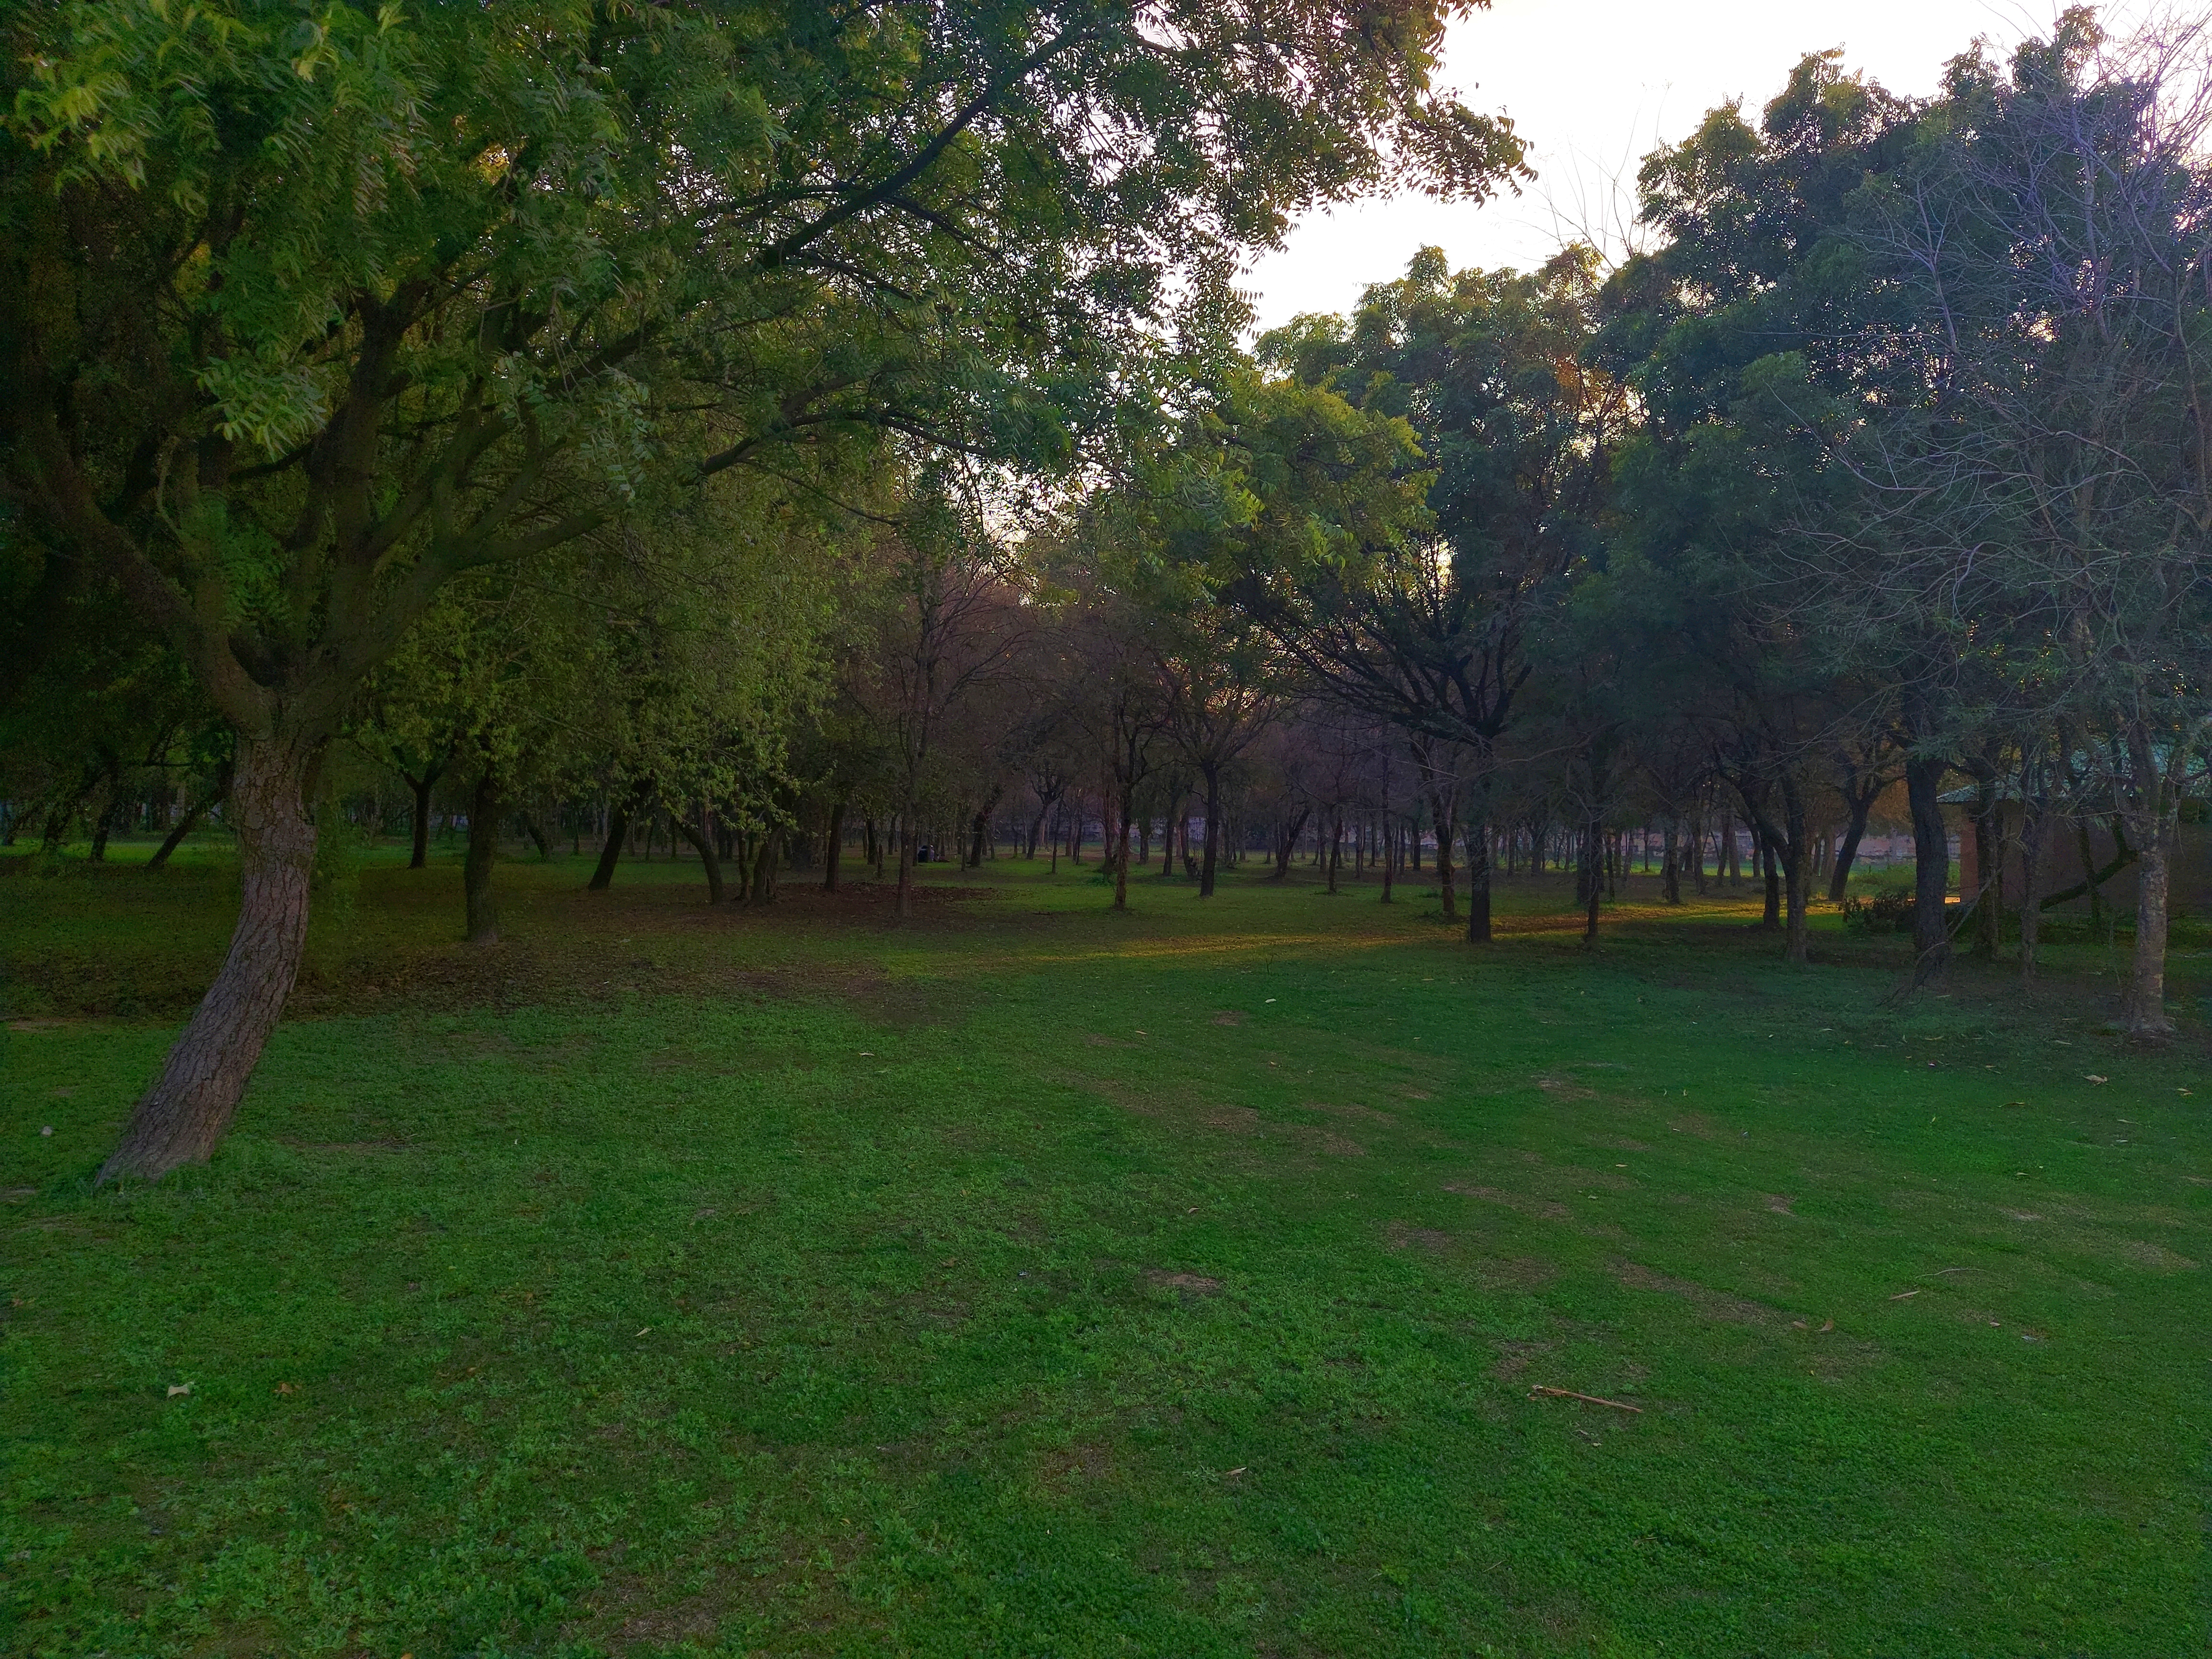 Greenery at the Janeshwar Mishra Park